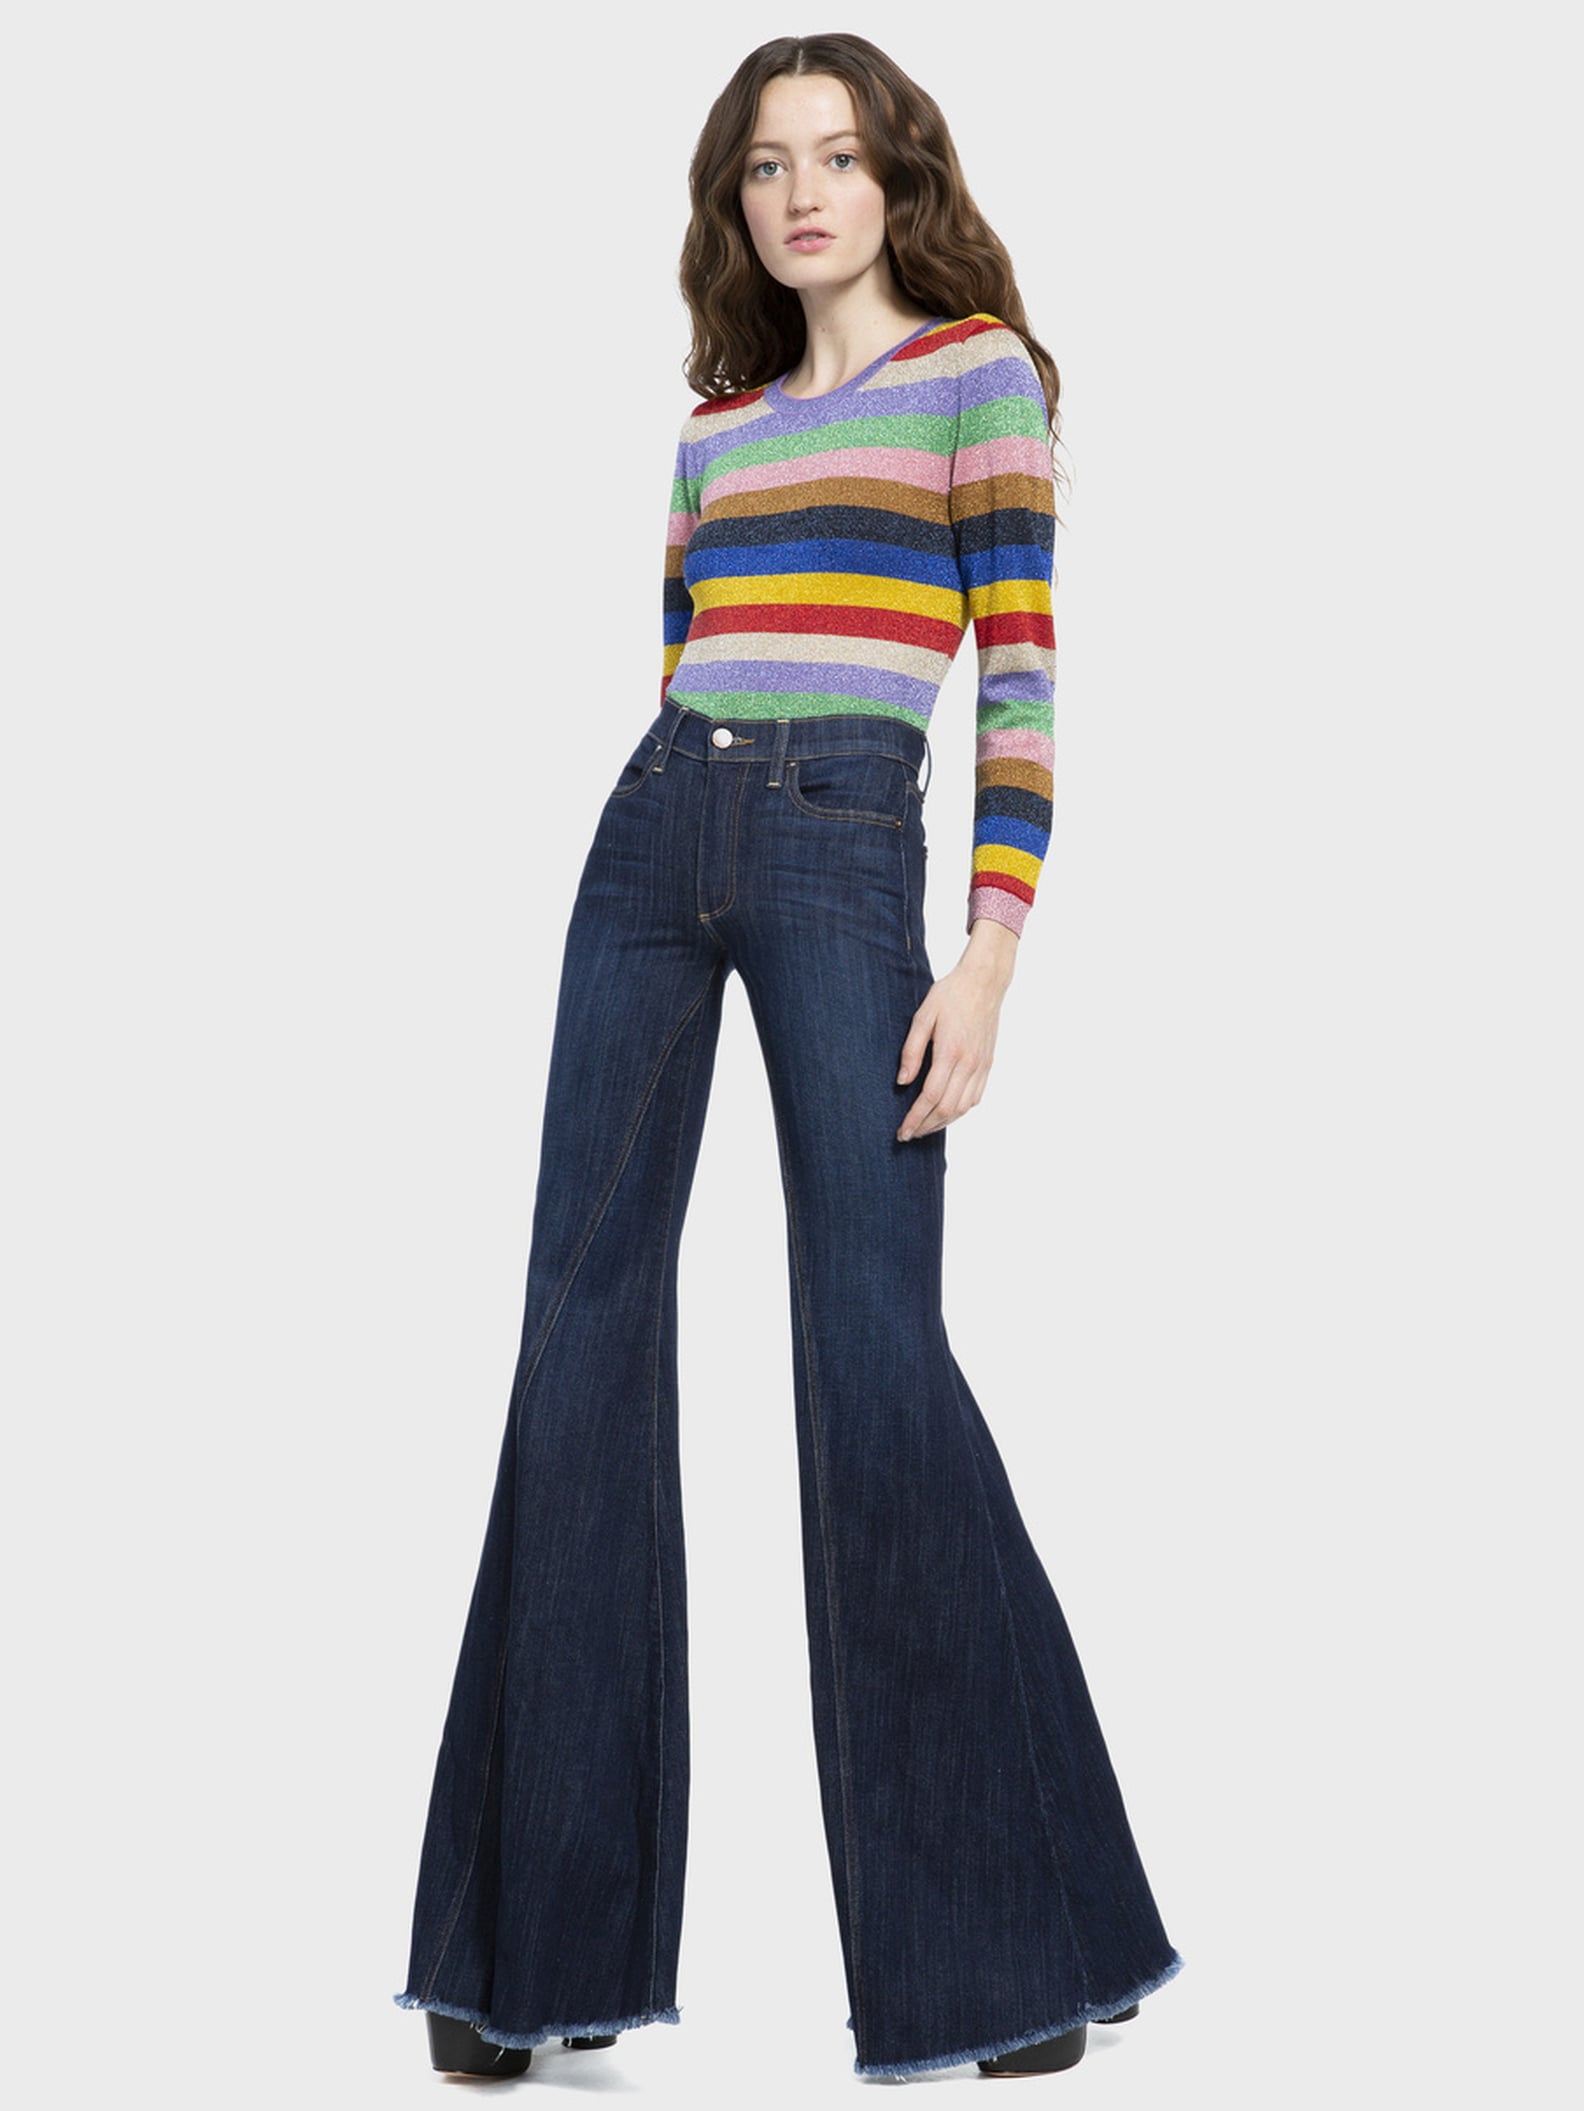 Flare Jeans 2018 Trend | POPSUGAR Fashion